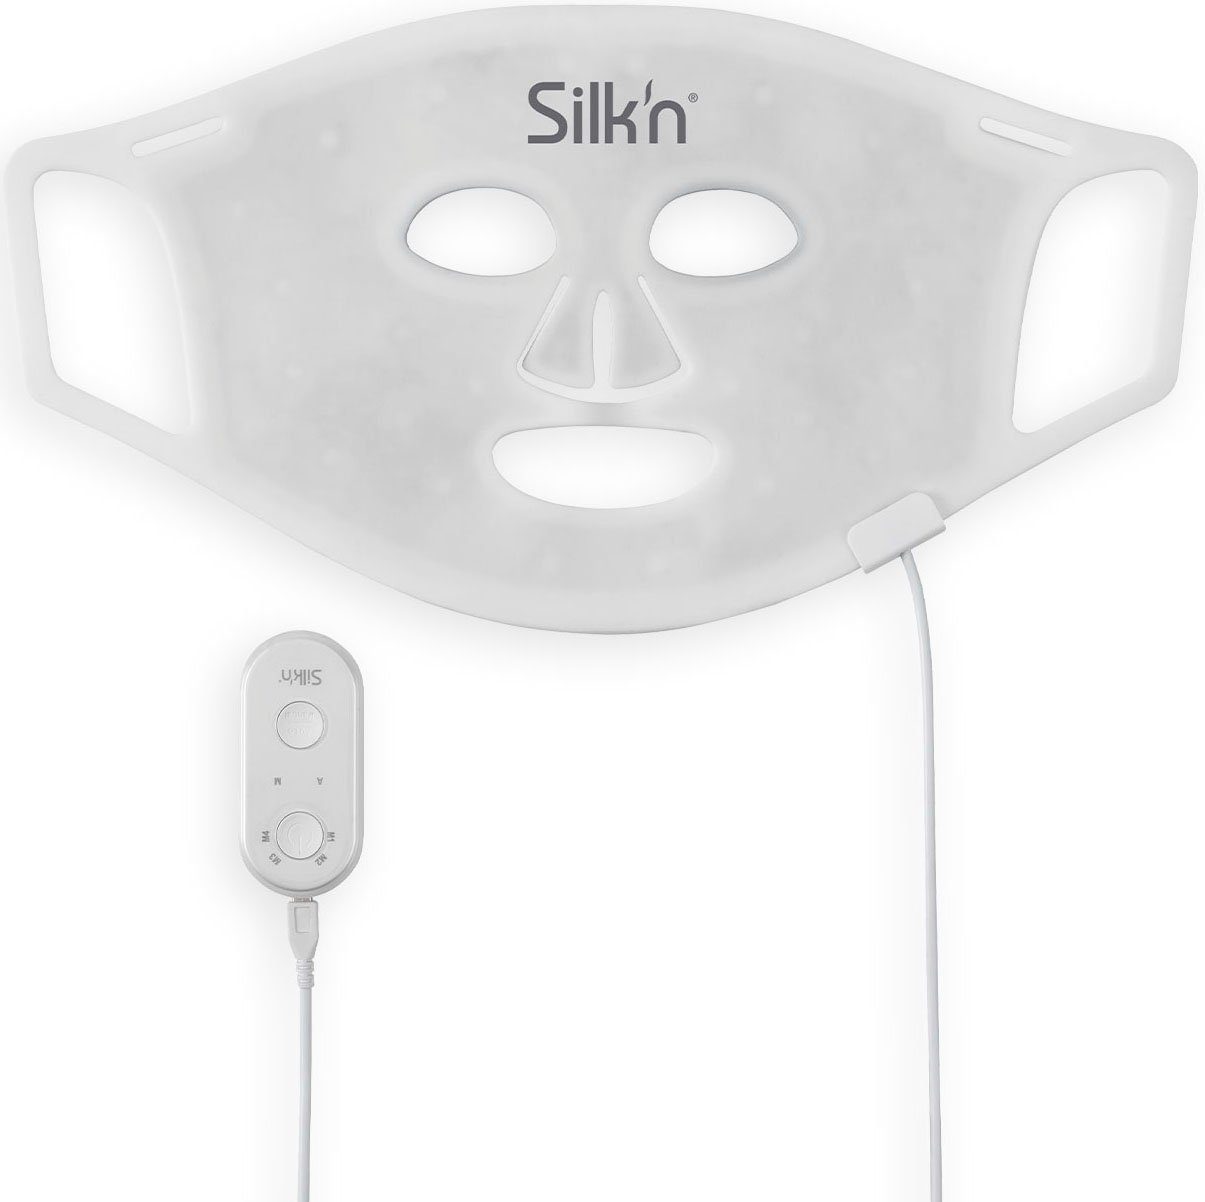 Face Mask LED Gesichtsmaske 100, 4 Silk'n LED mit Kosmetikbehandlungsgerät Lichtfarben